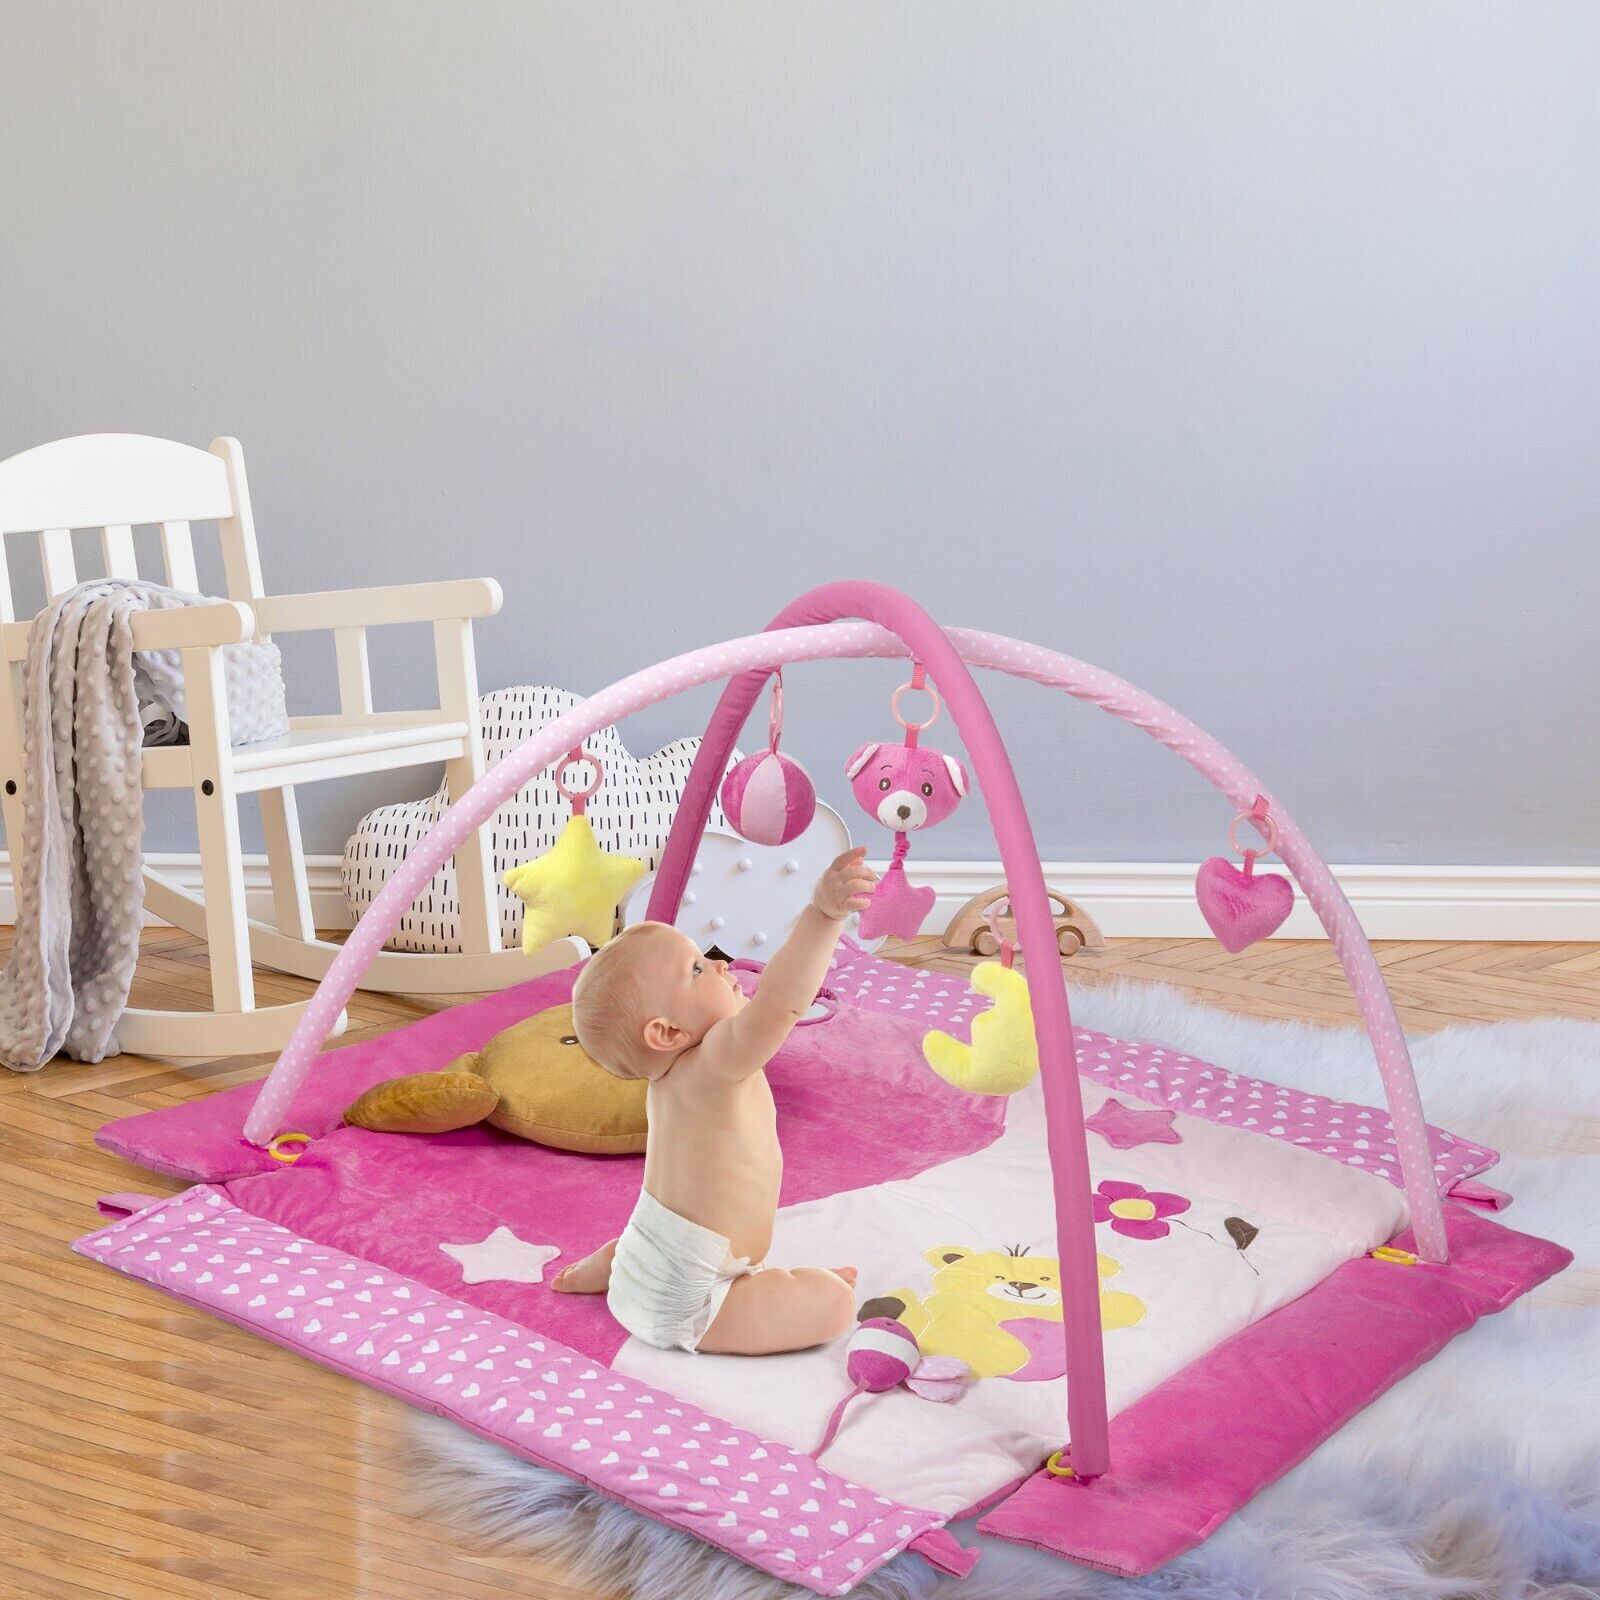 Infant Play Gym with Developmental Toys